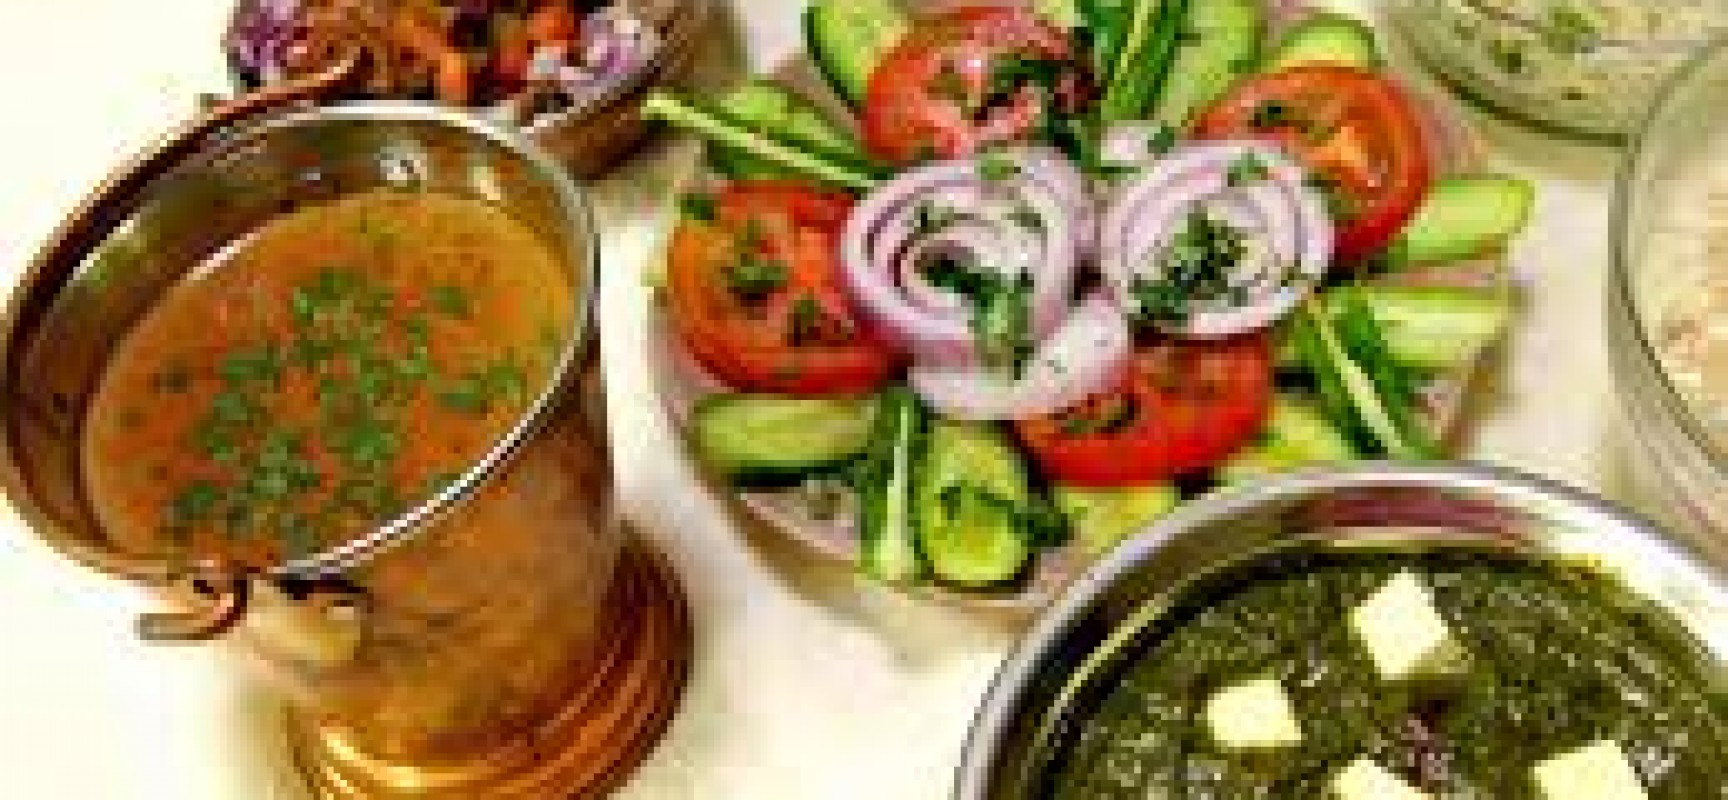 Punjabi food : Heartily delicious